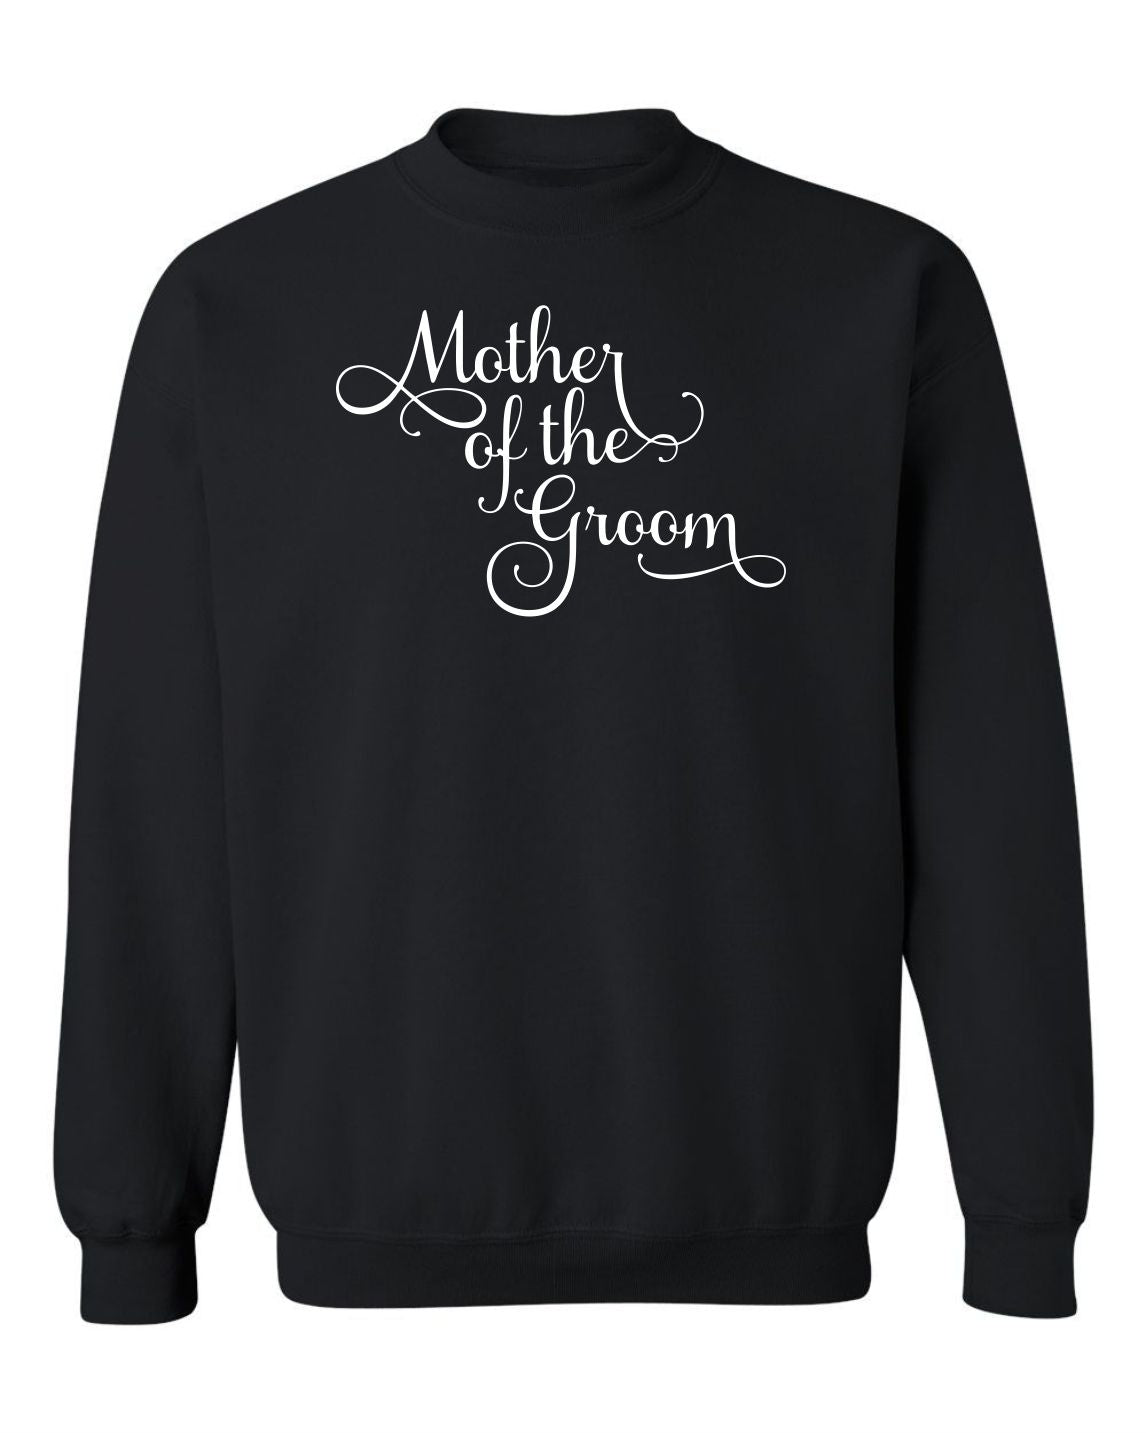 "Mother Of The Groom" (Swirl Design) Unisex Crewneck Sweatshirt